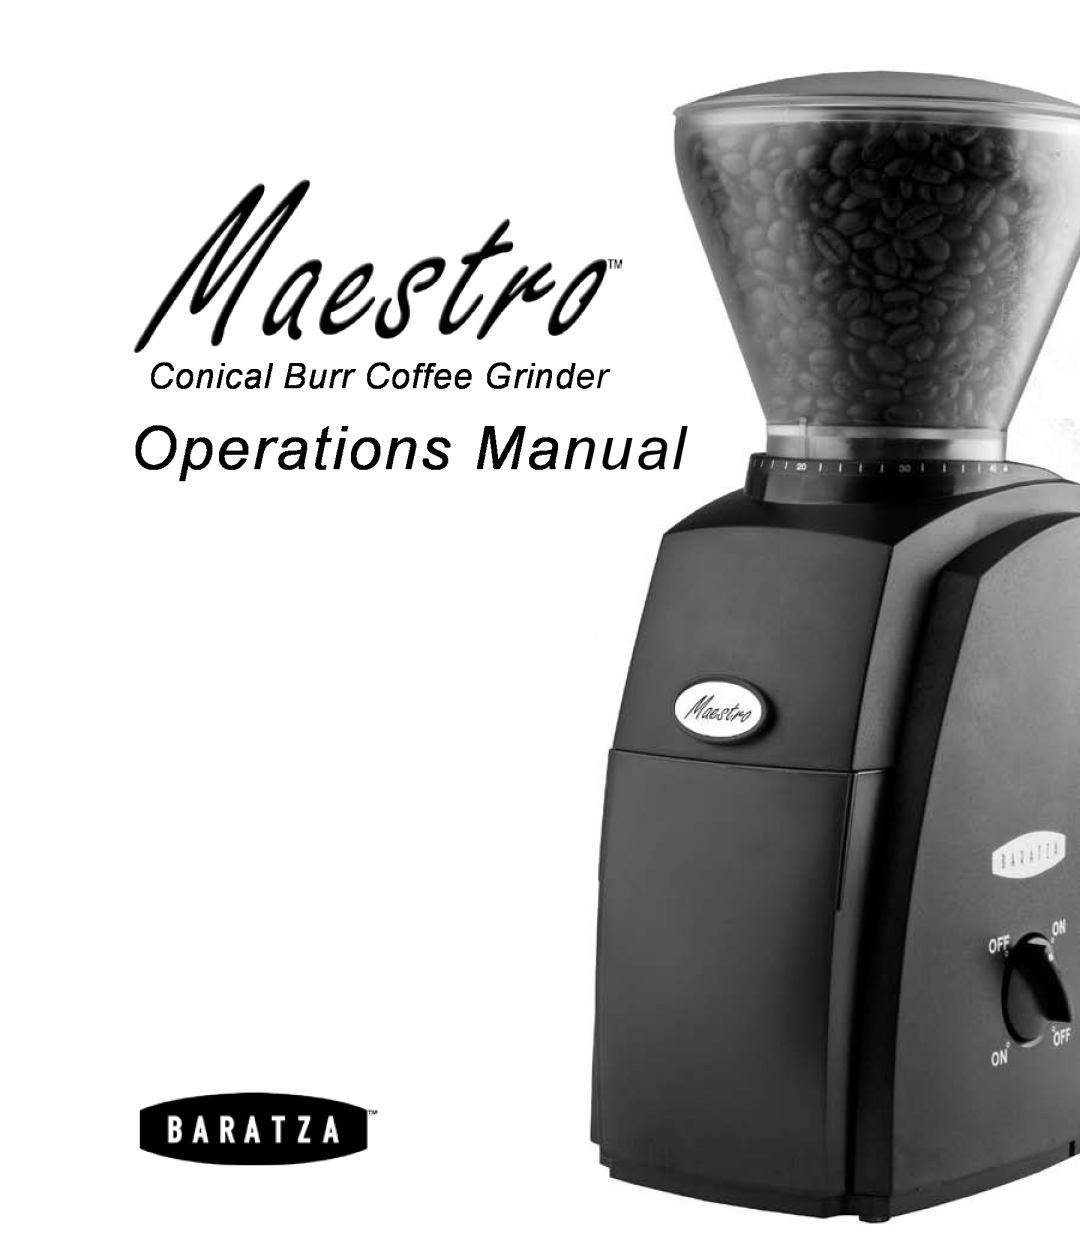 Baratza Maestro manual Operations Manual, Conical Burr Coffee Grinder 